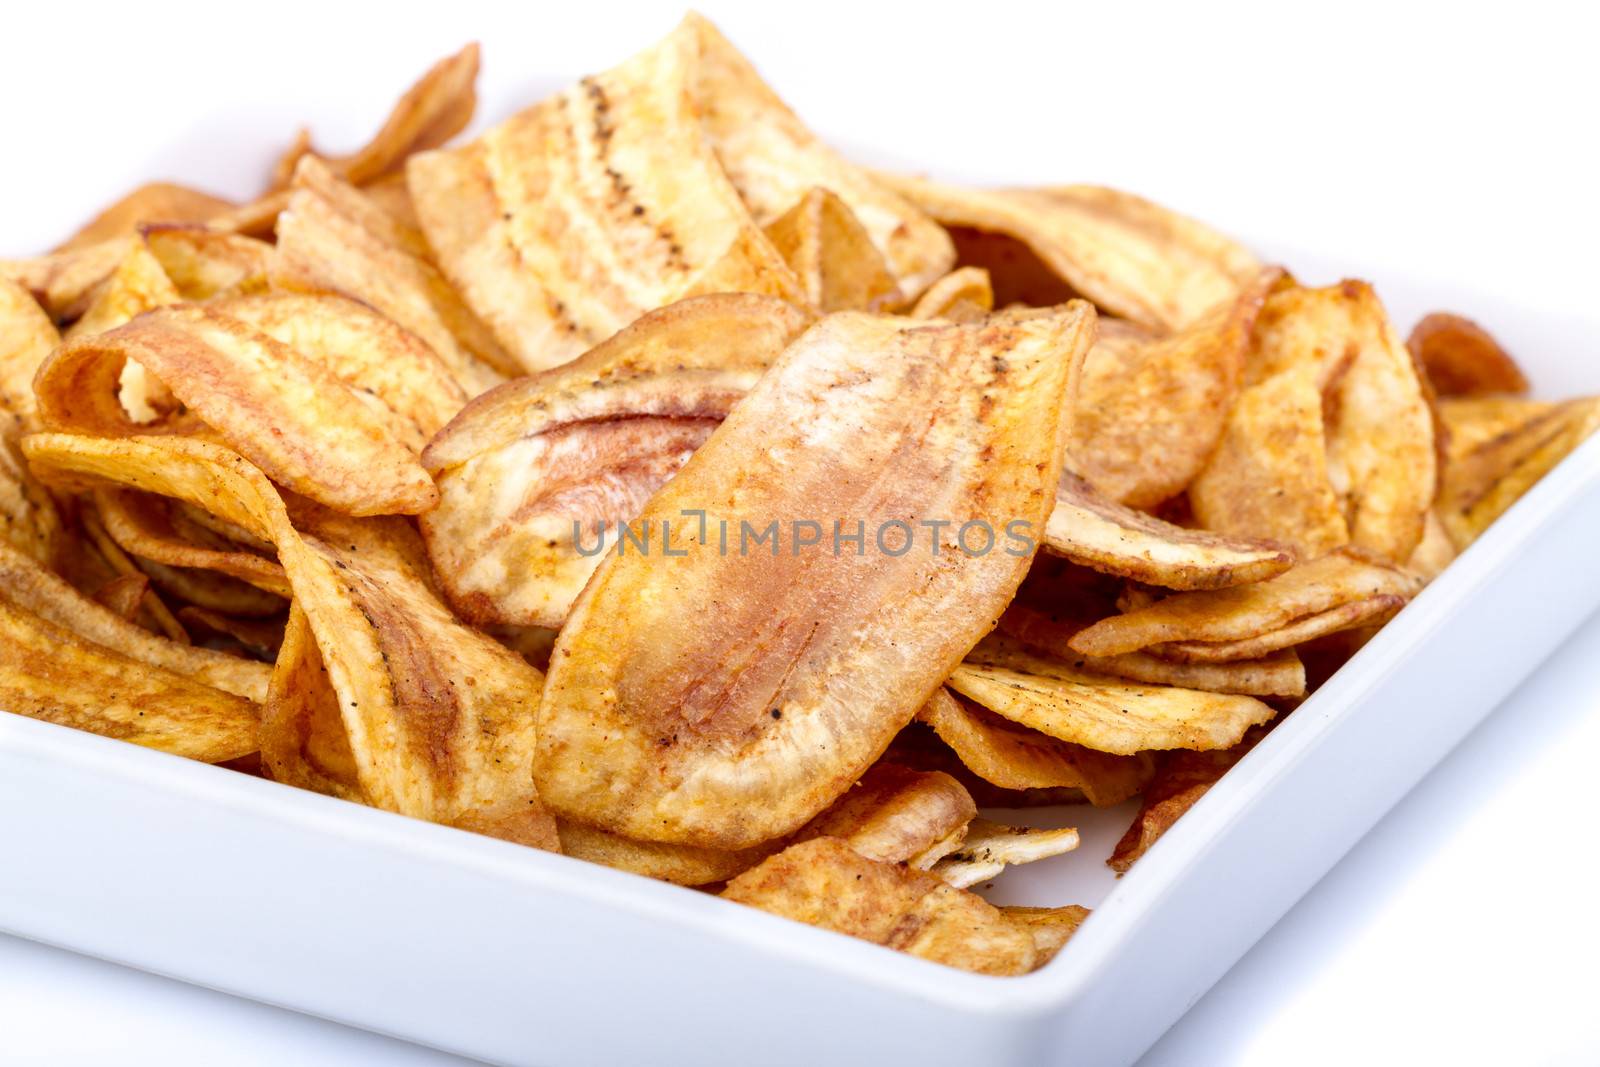 Crispy banana chip on white dish on white background